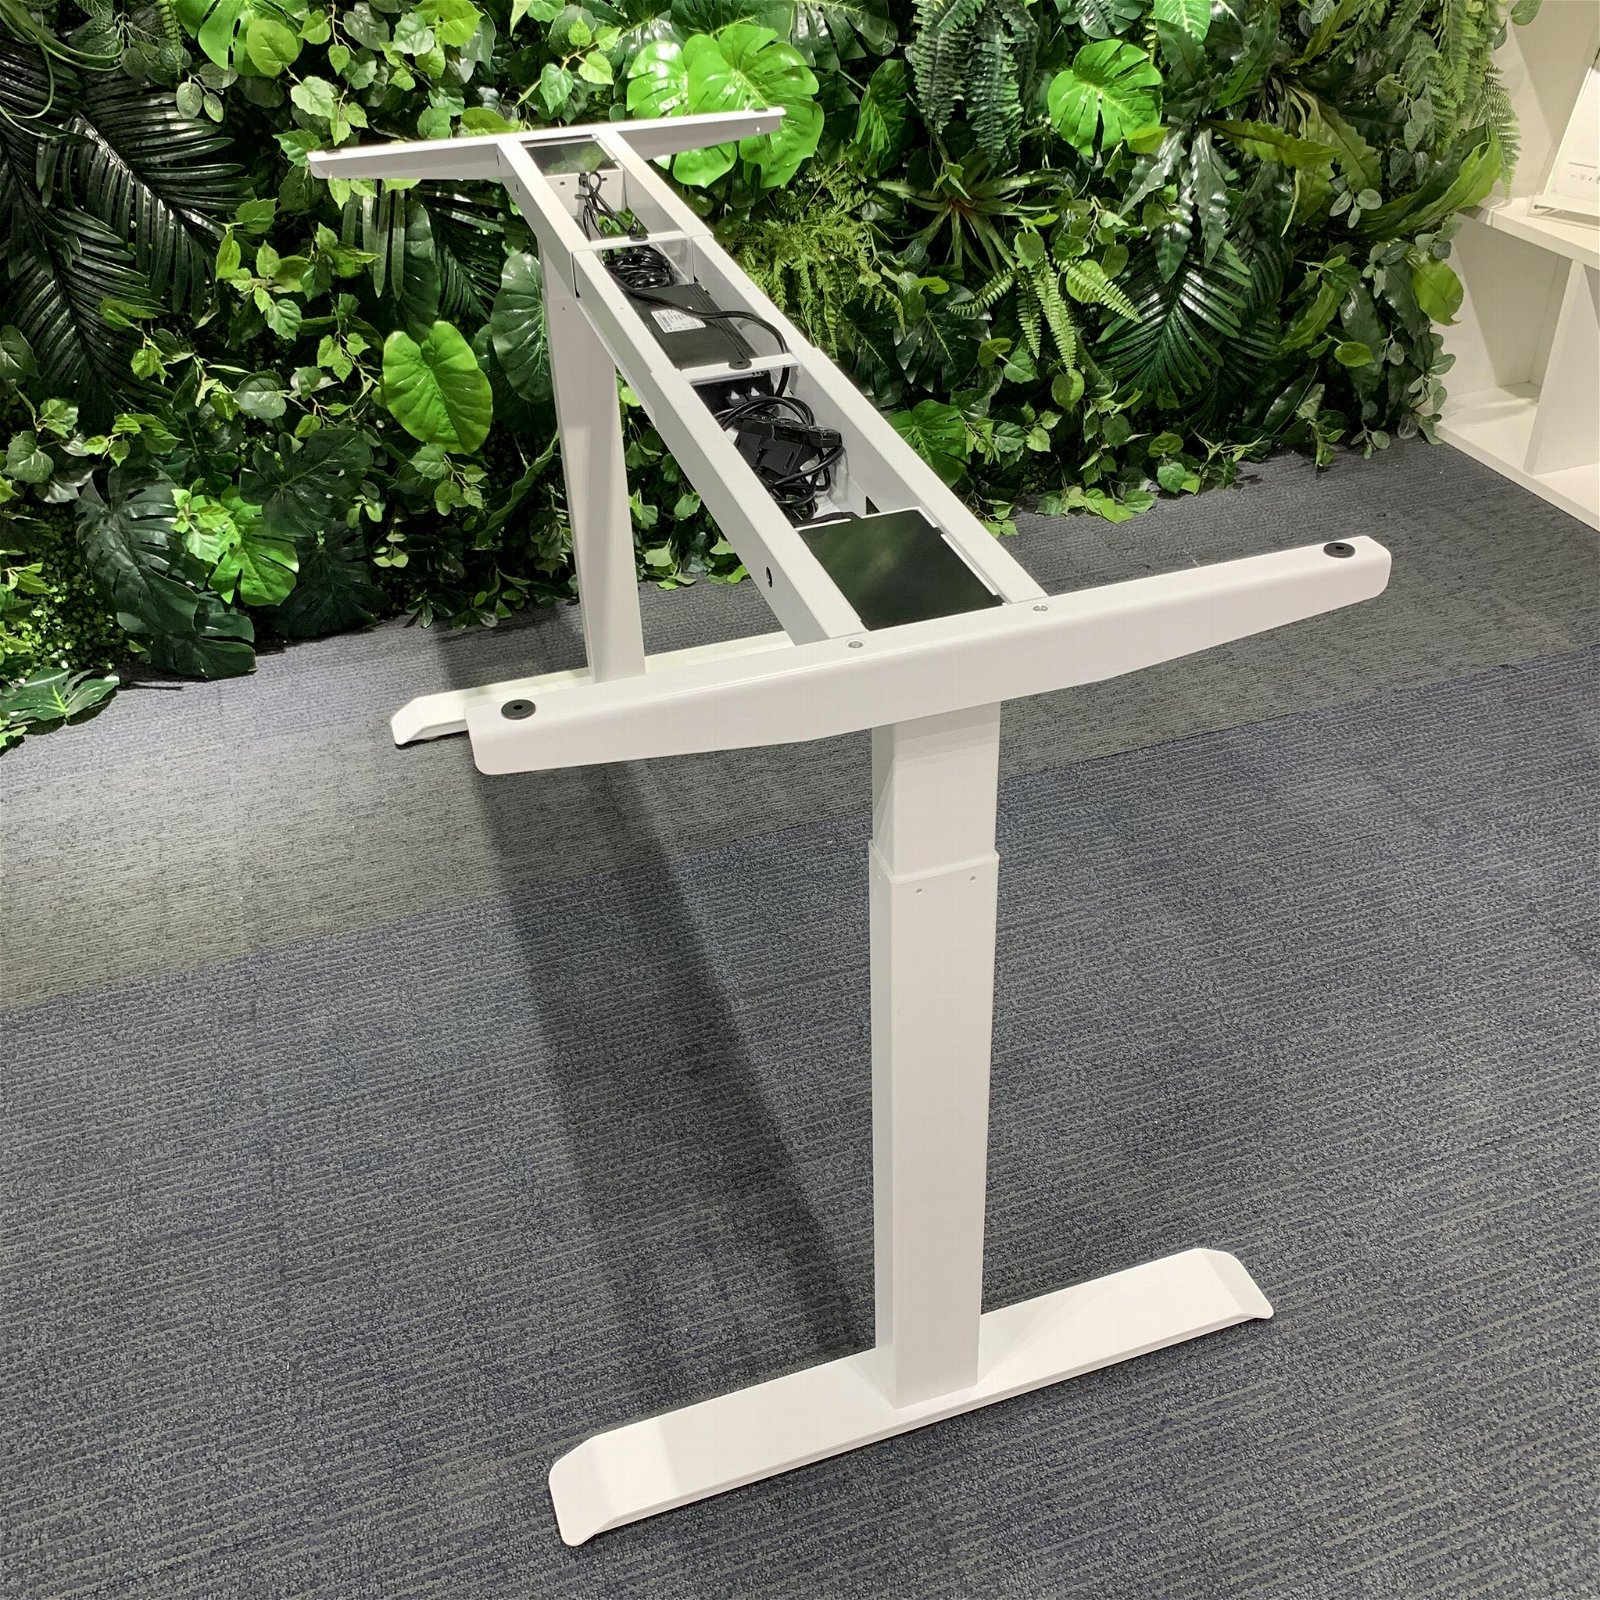 Dual motor height adjustable sit standing desk 